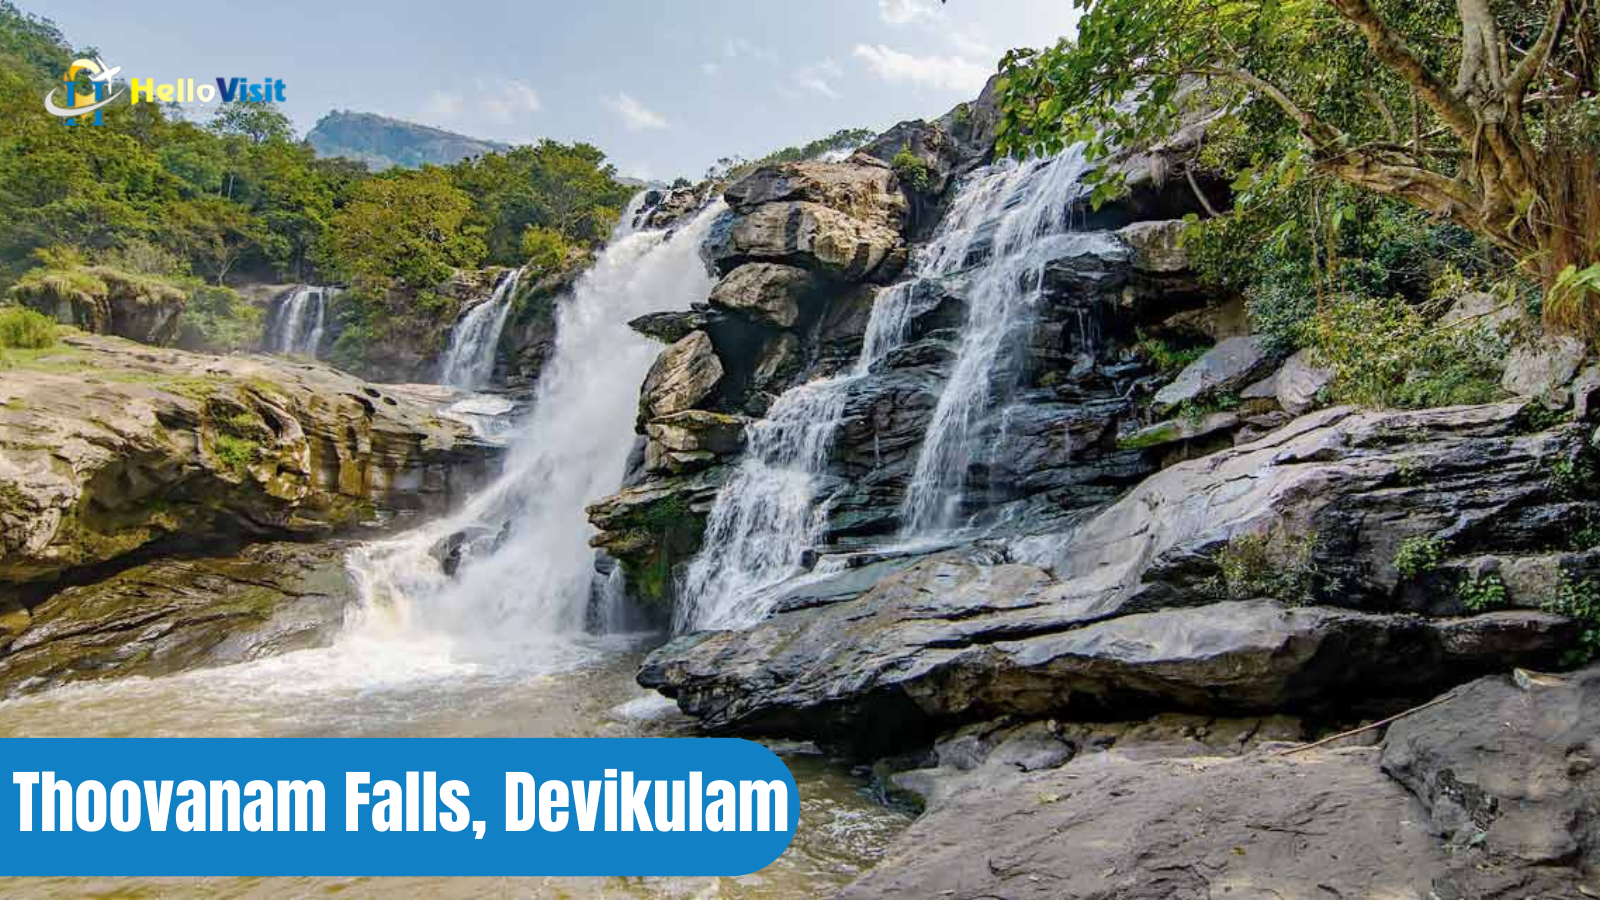 Thoovanam Falls, Devikulam